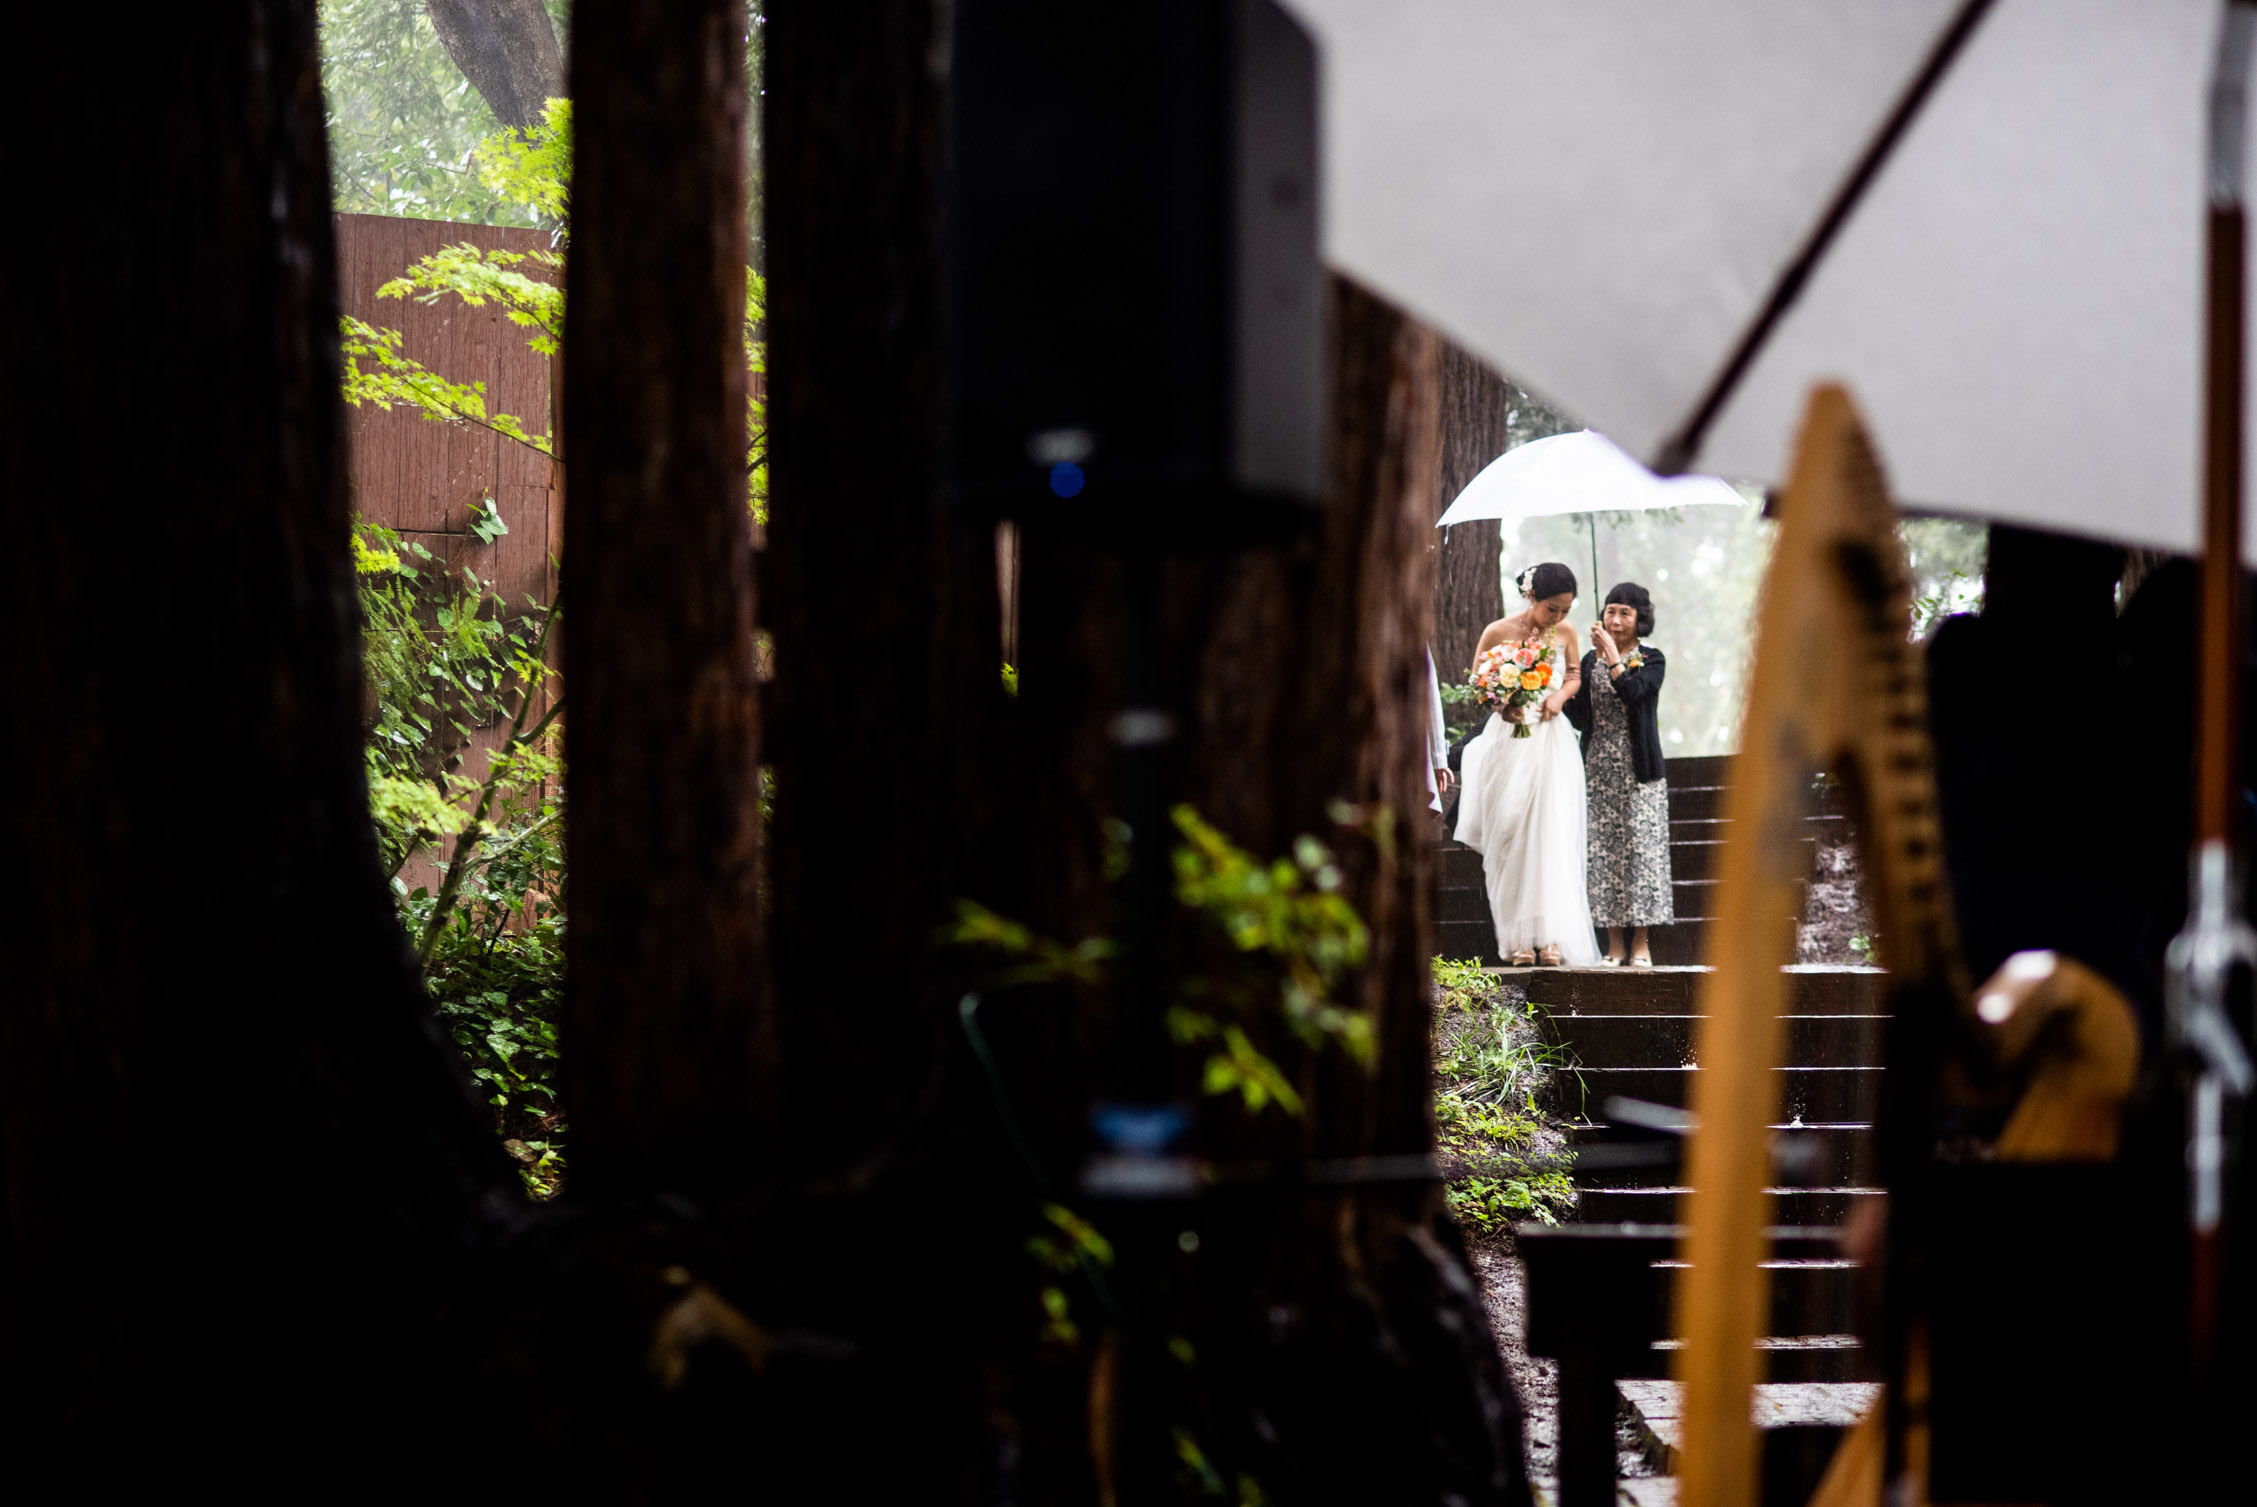 The brides mother holds umbrella for bride entrance at redwoods wedding